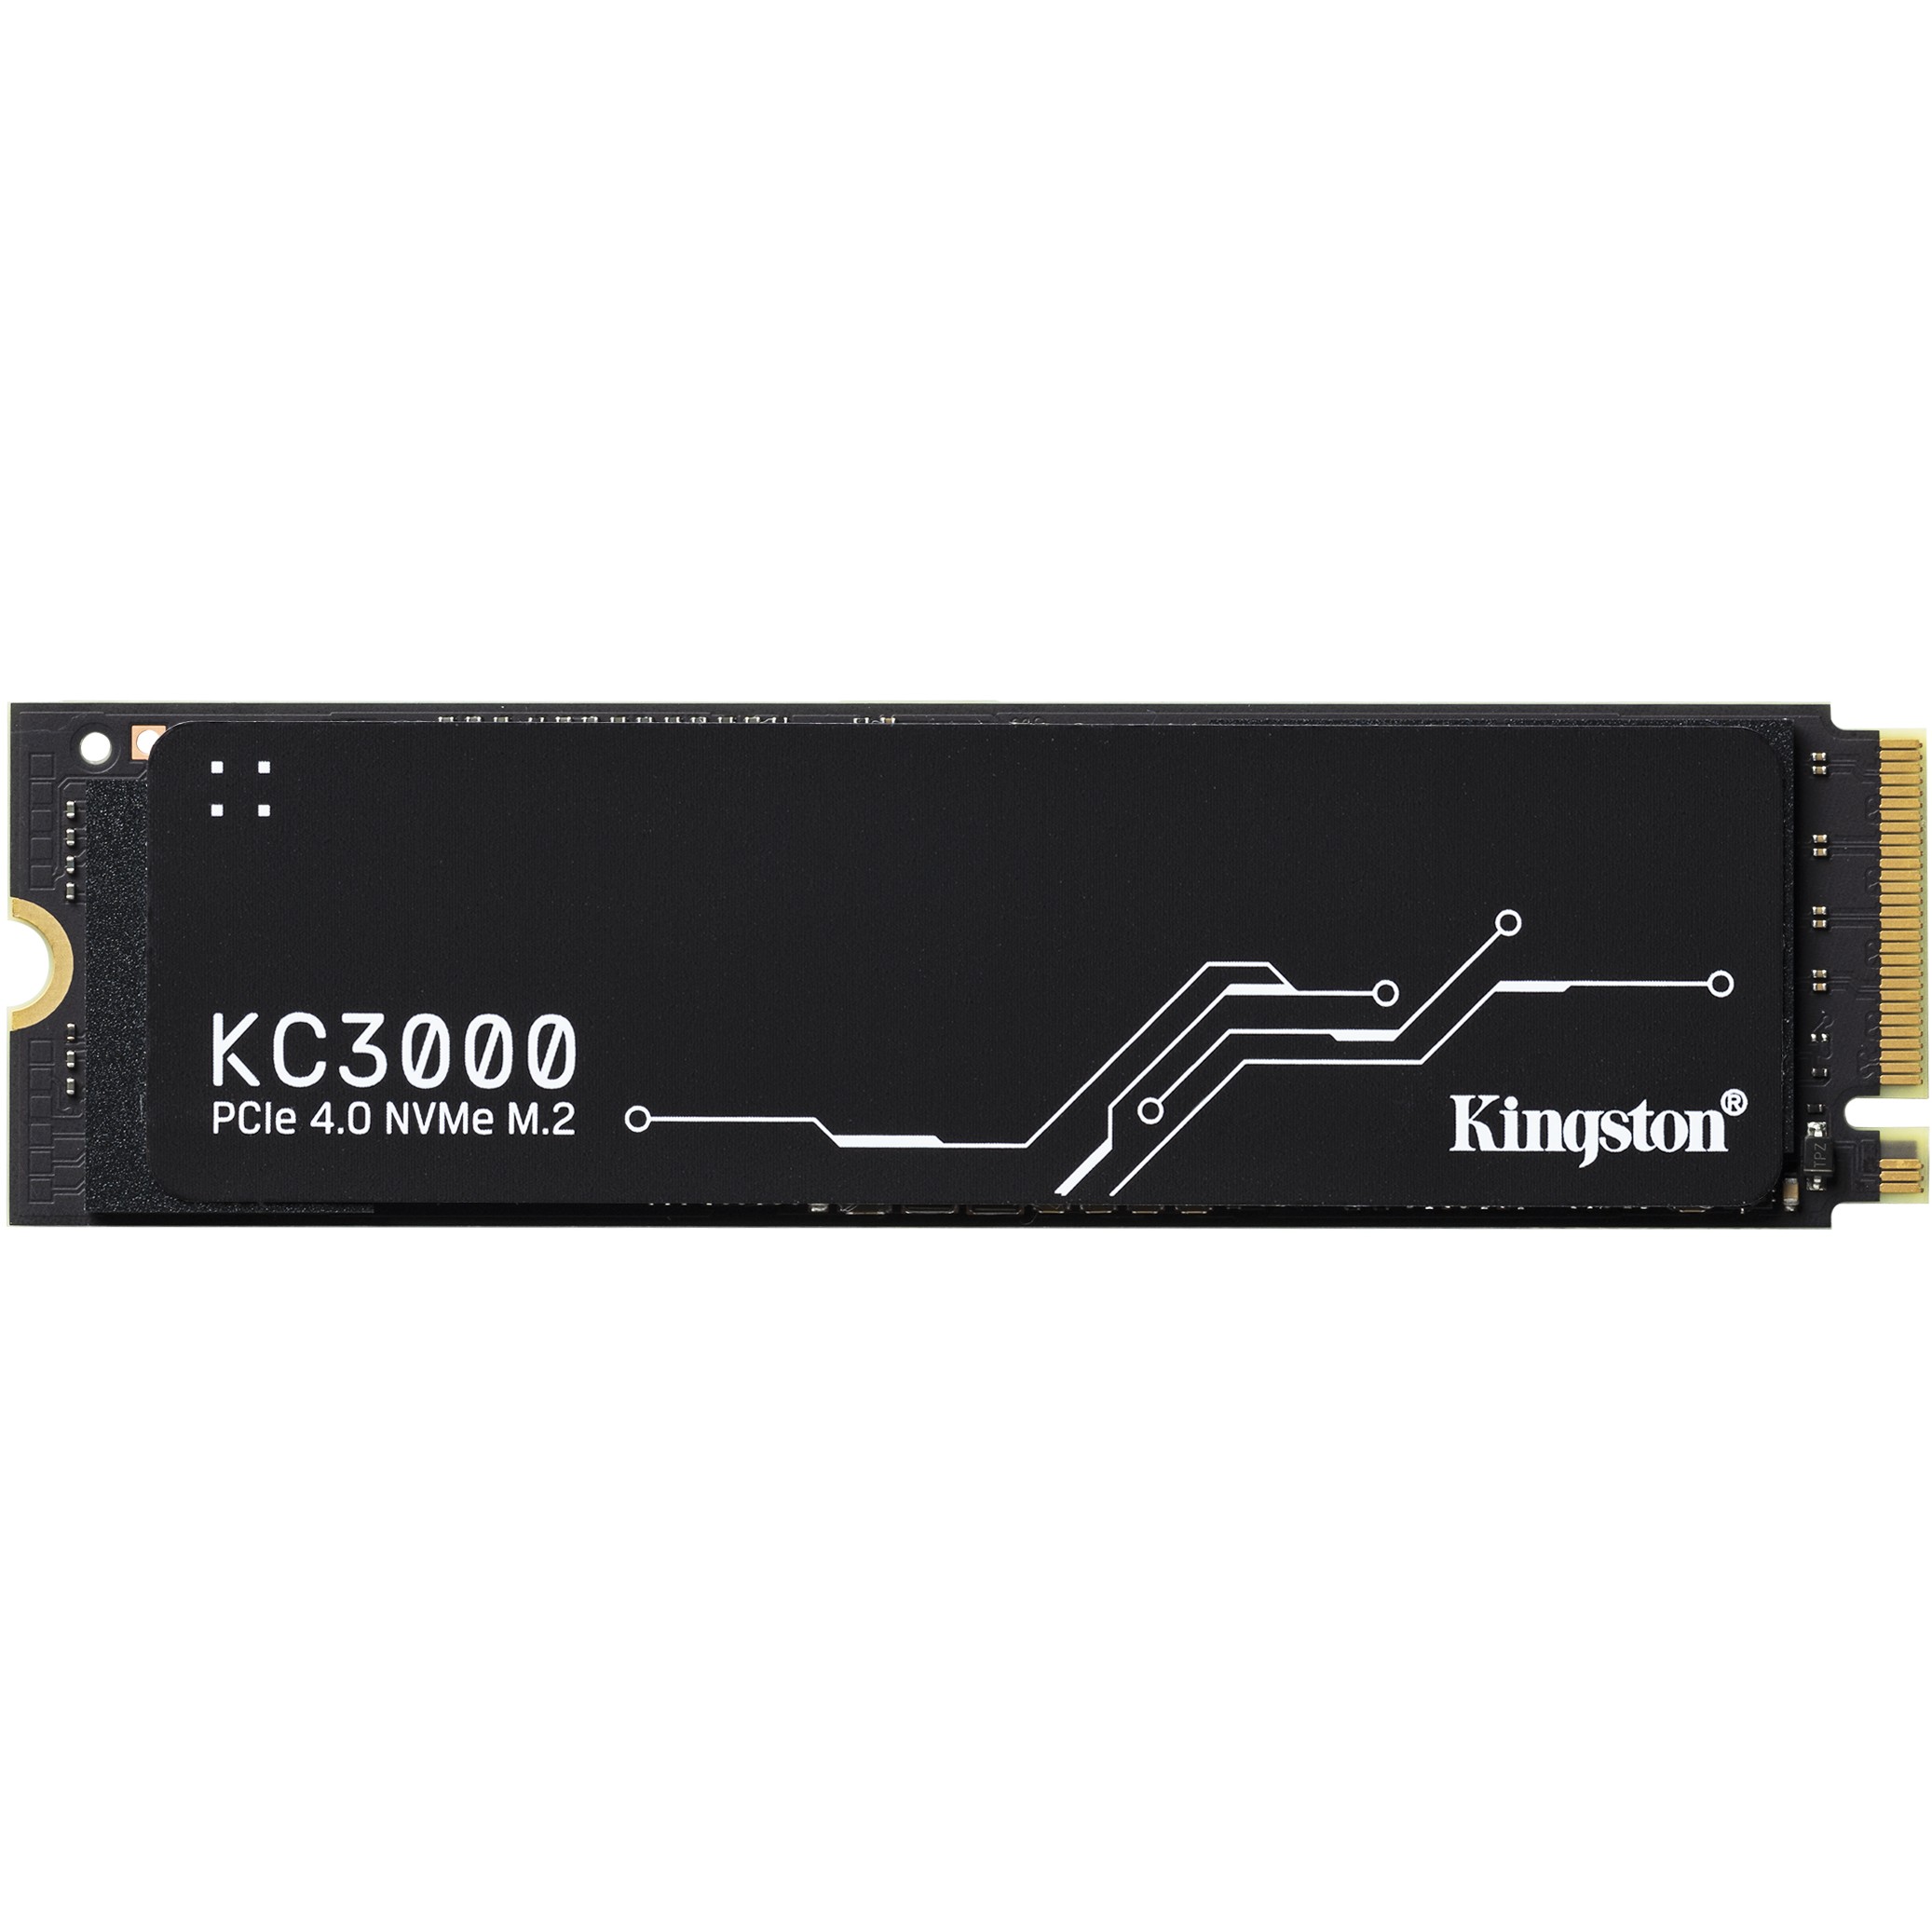 Kingston SKC3000D/4096G, Interne SSDs, Kingston KC3000  (BILD1)